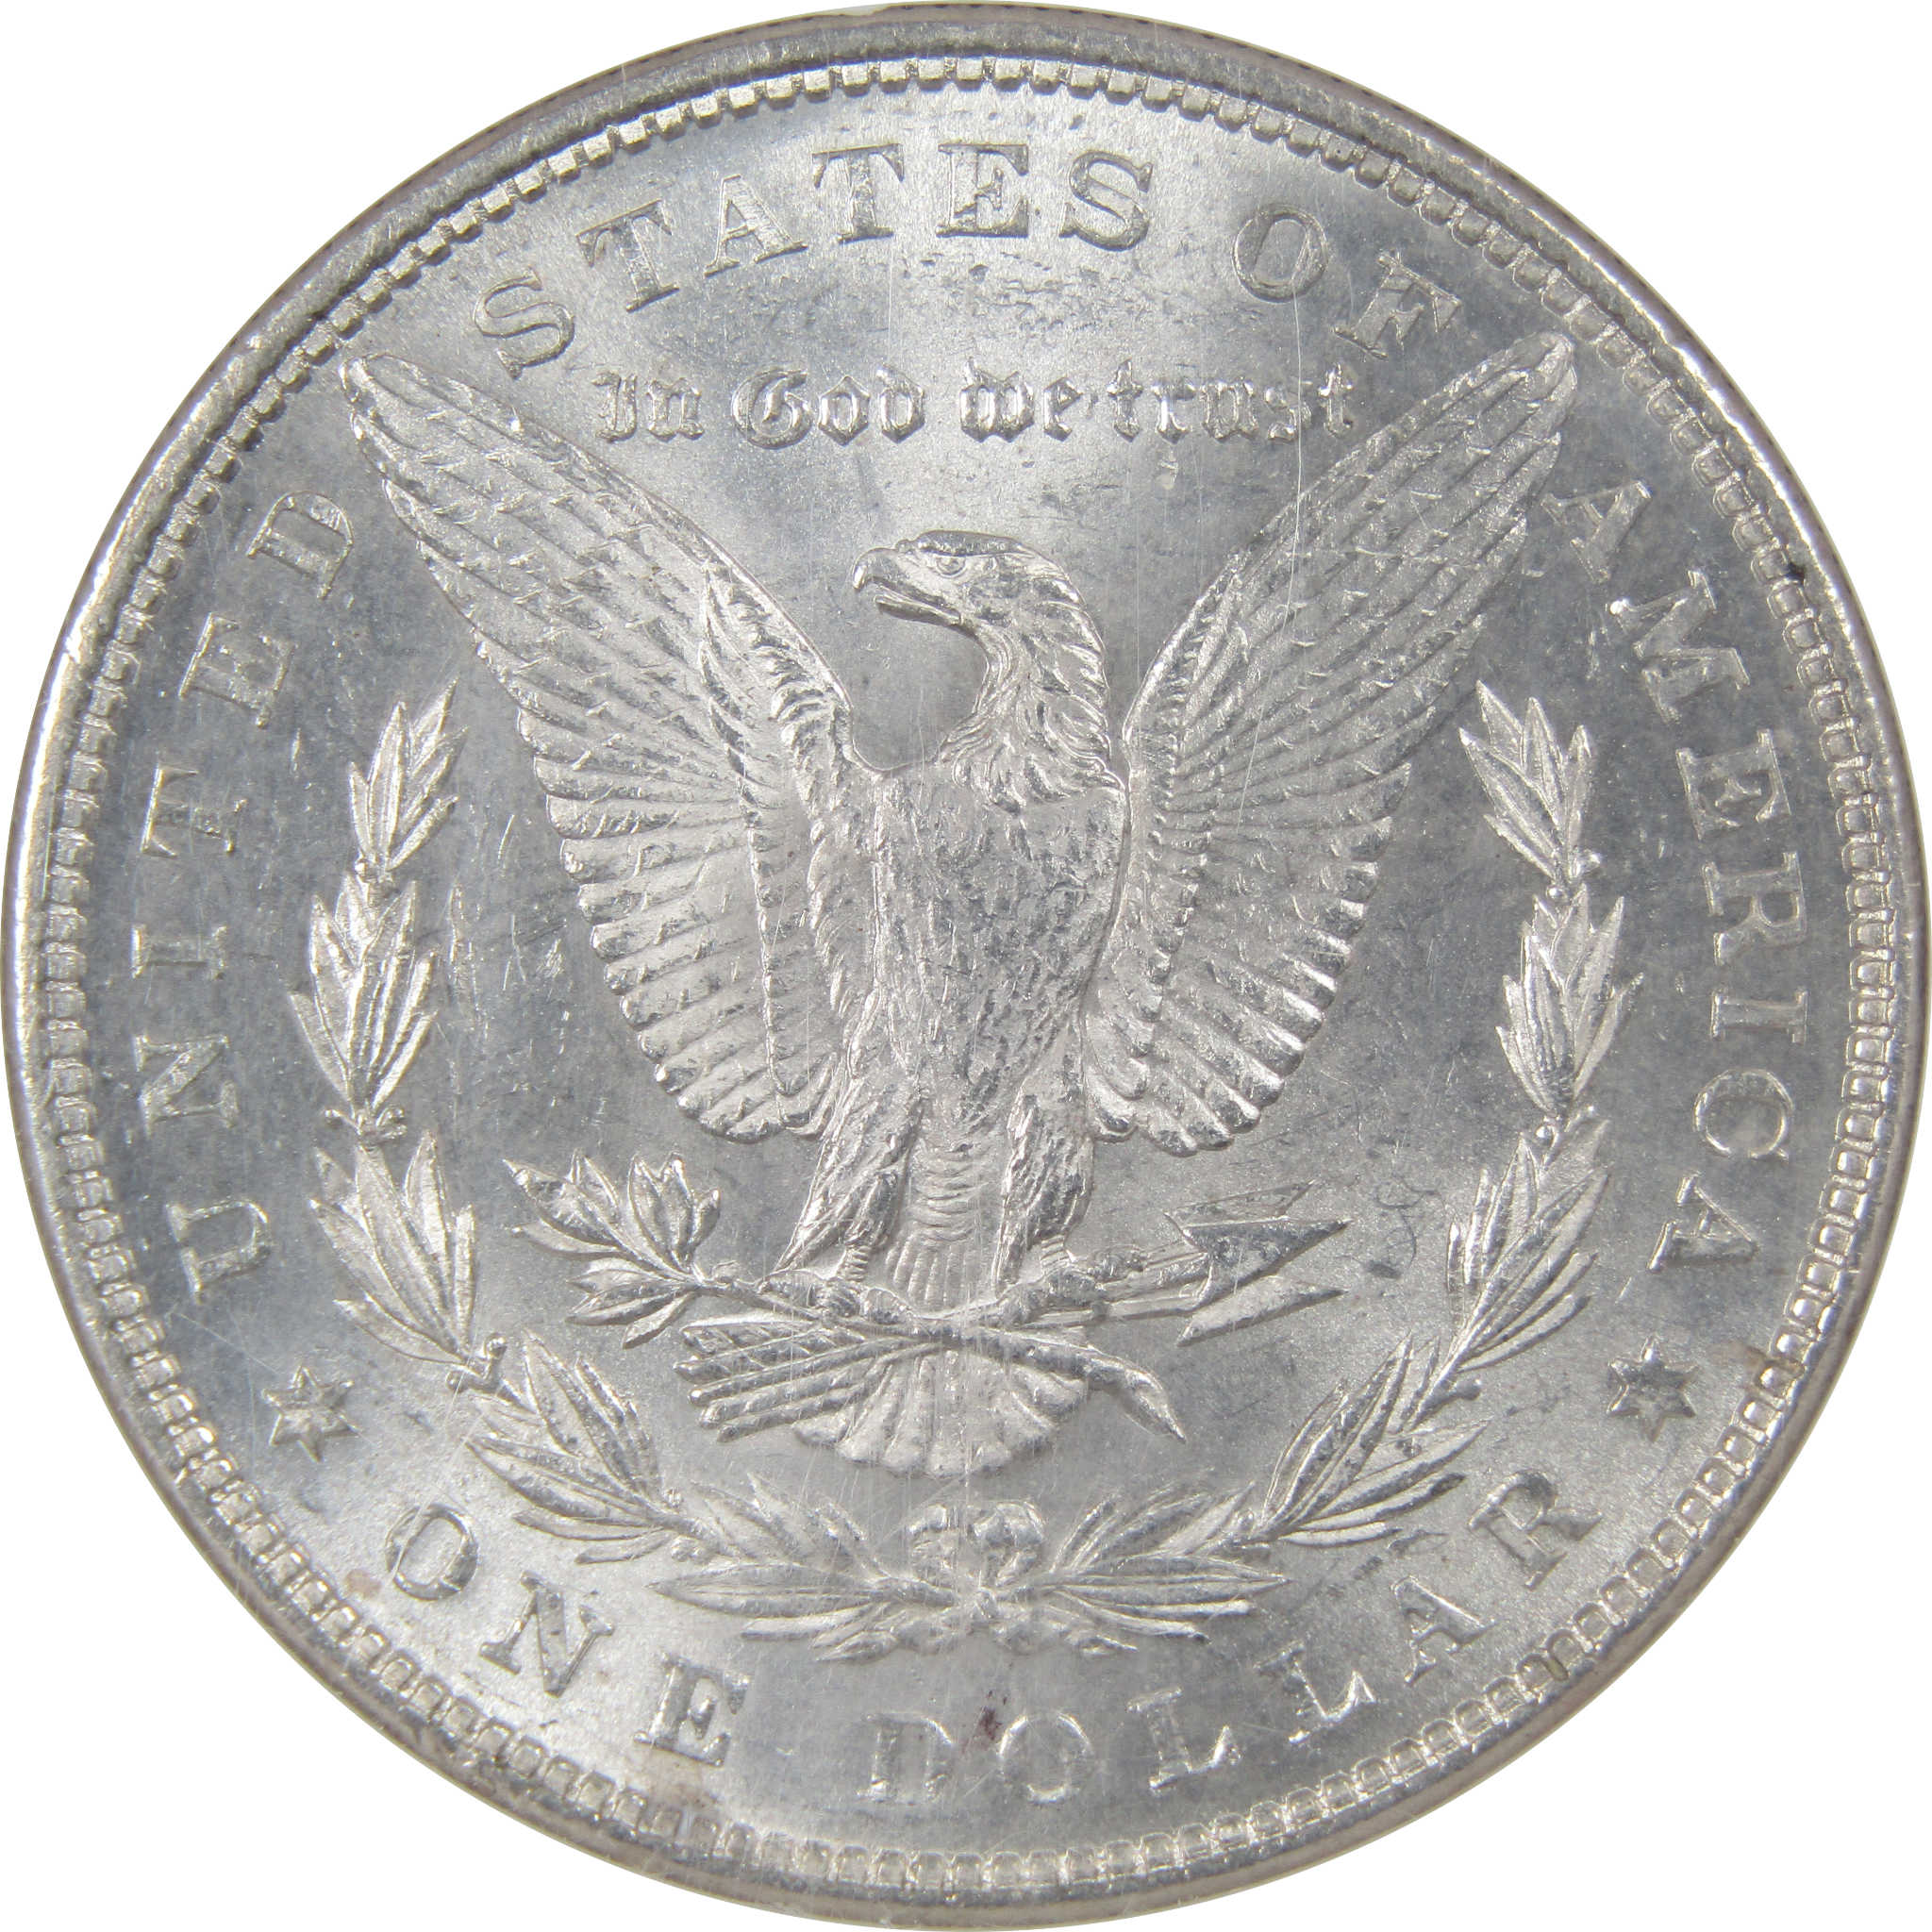 1878 7TF Rev 79 Morgan Dollar MS 63 NGC Silver SKU:IPC5893 - Morgan coin - Morgan silver dollar - Morgan silver dollar for sale - Profile Coins &amp; Collectibles